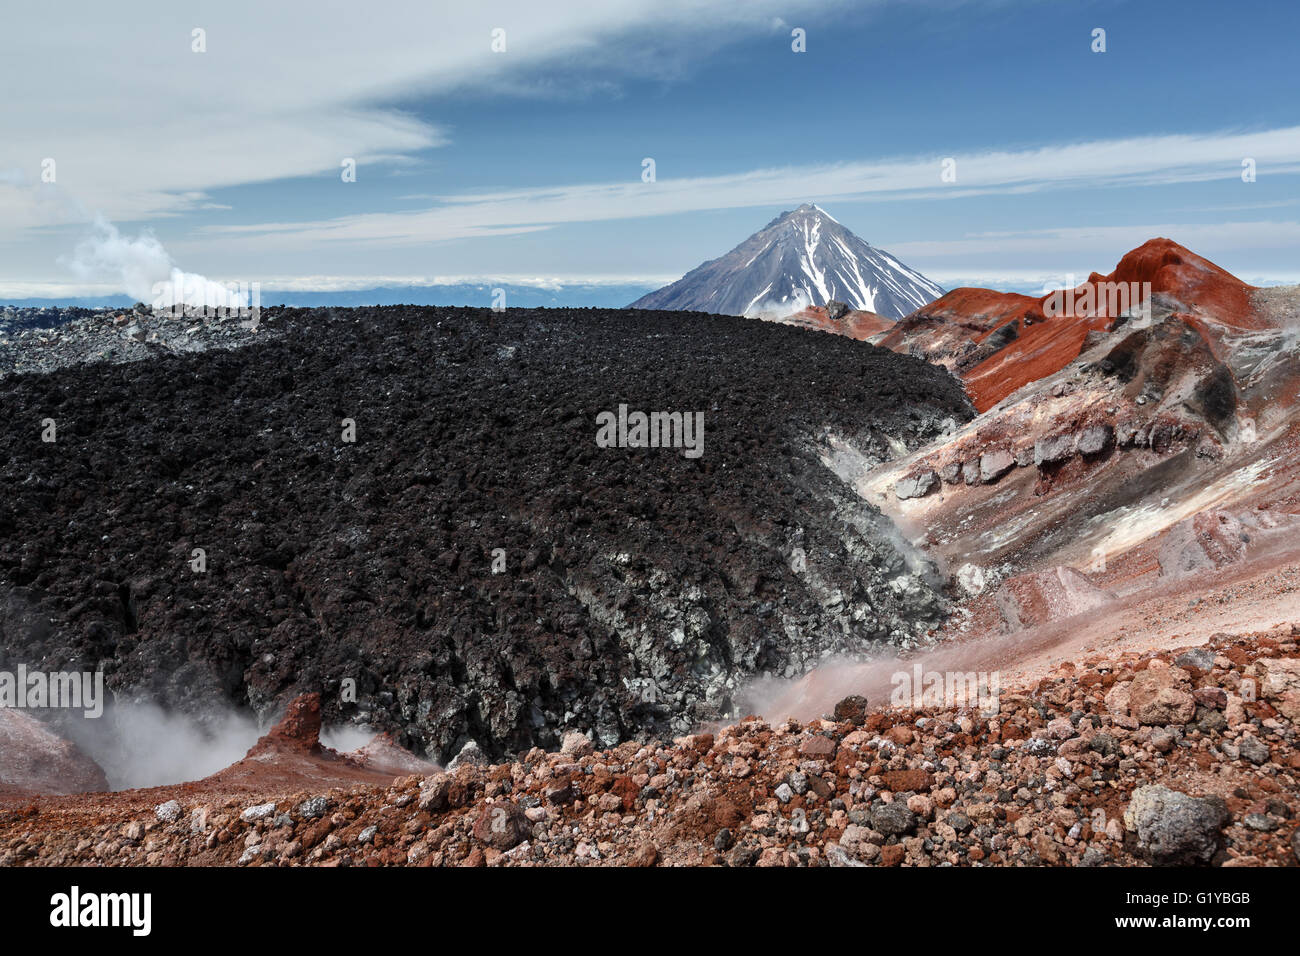 Summer volcanic landscape of Kamchatka: beautiful view of active crater Avachinsky Volcano on Kamchatka Peninsula on background Stock Photo